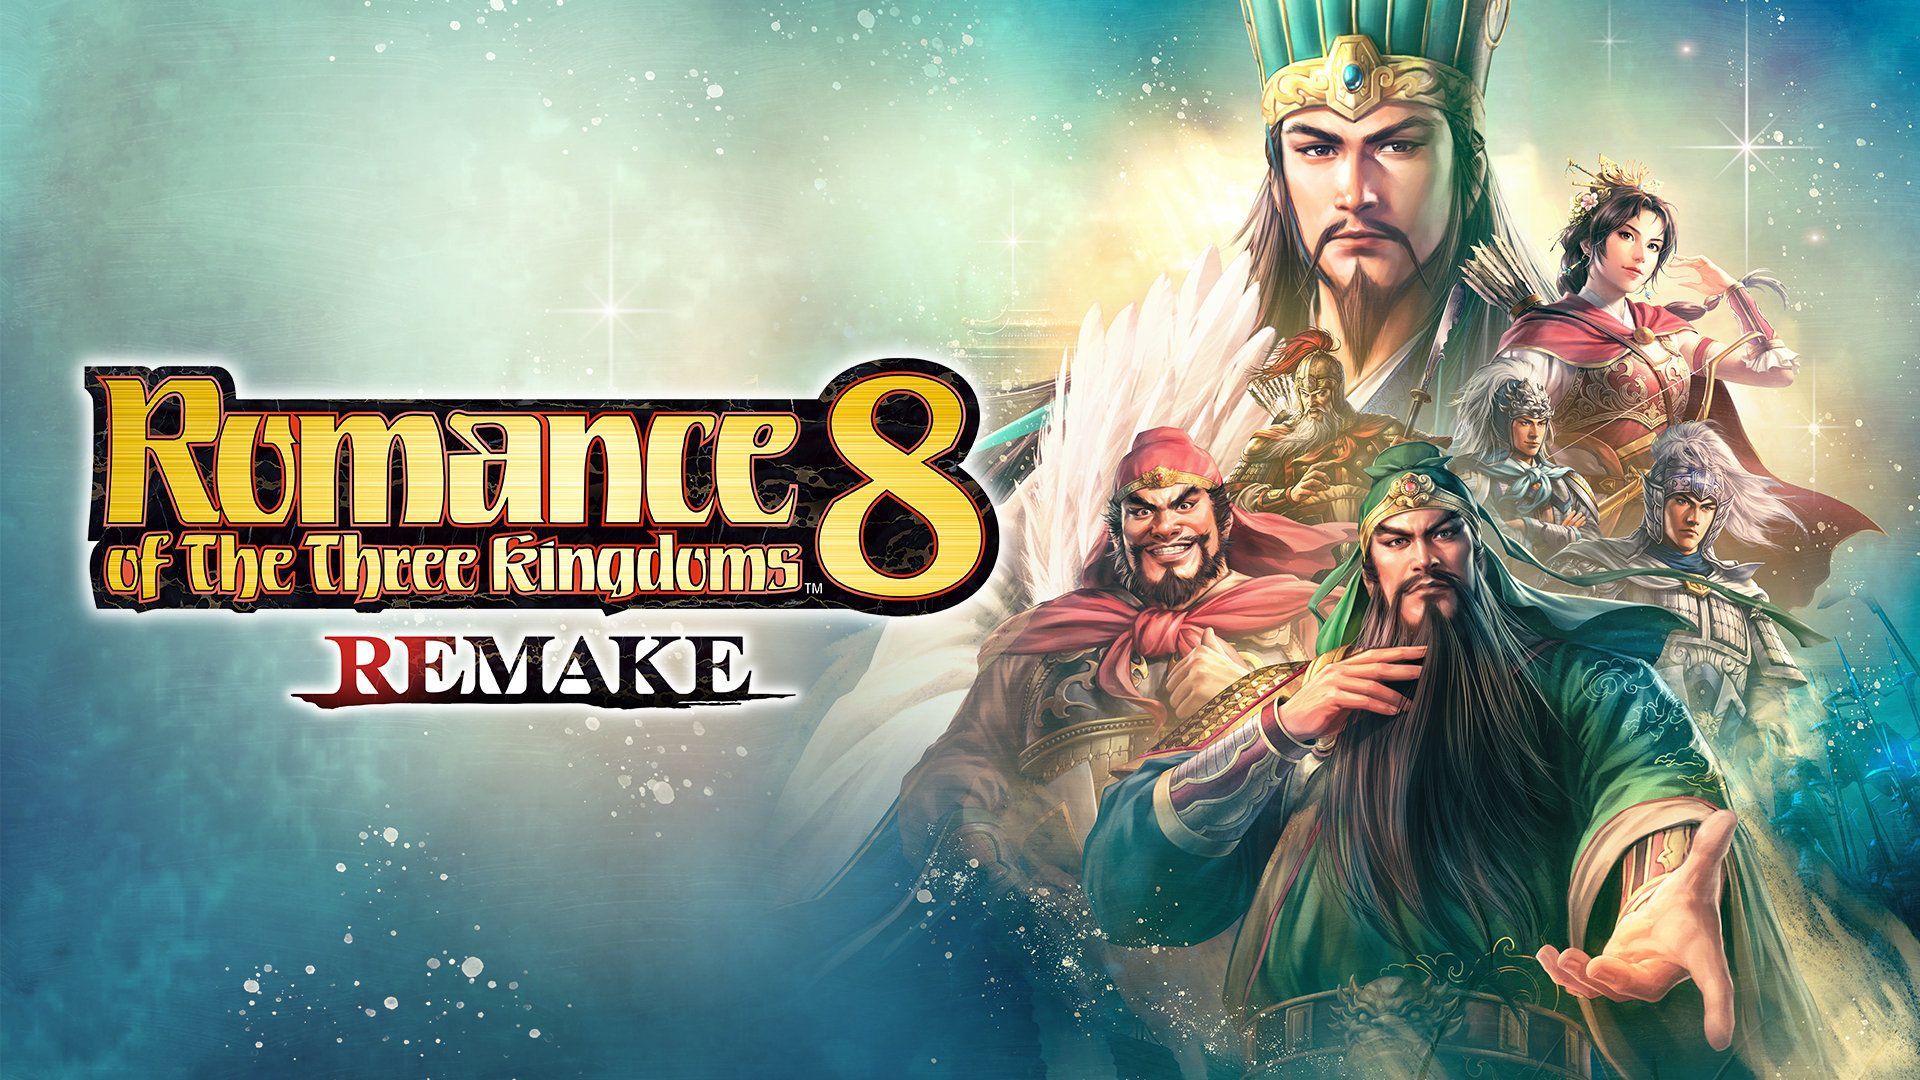 Romance of the Three Kingdoms 8 Remake - Voit sa date de sortie décalée sur consoles et PC - GEEKNPLAY Home, News, Nintendo Switch, PlayStation 4, PlayStation 5